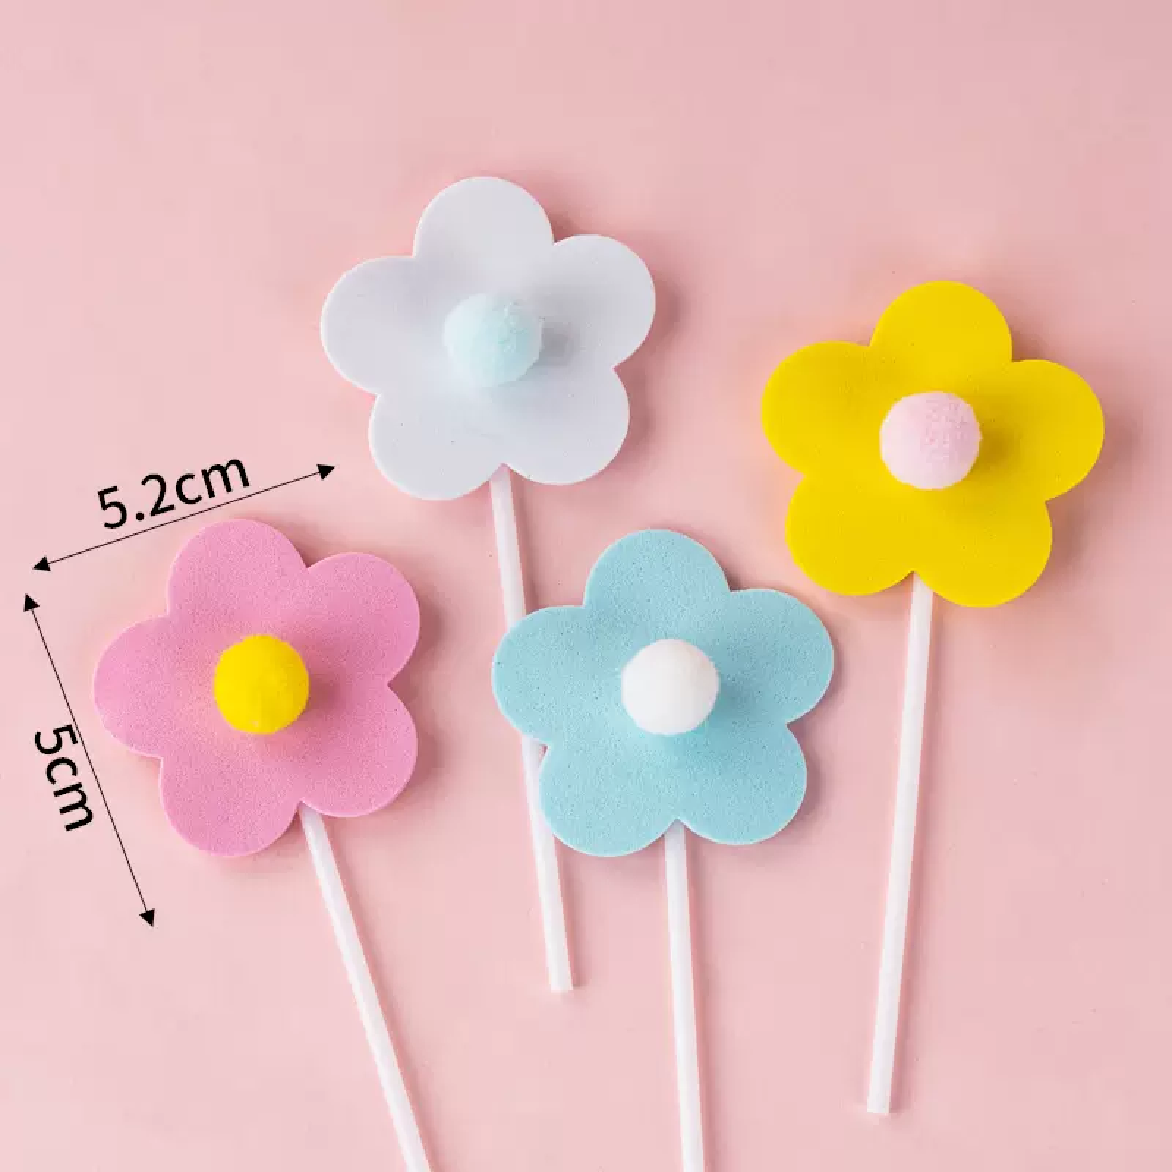 Cake Topper, Cupcake Decorations - Daisy Flower Shape - Set of 4pcs